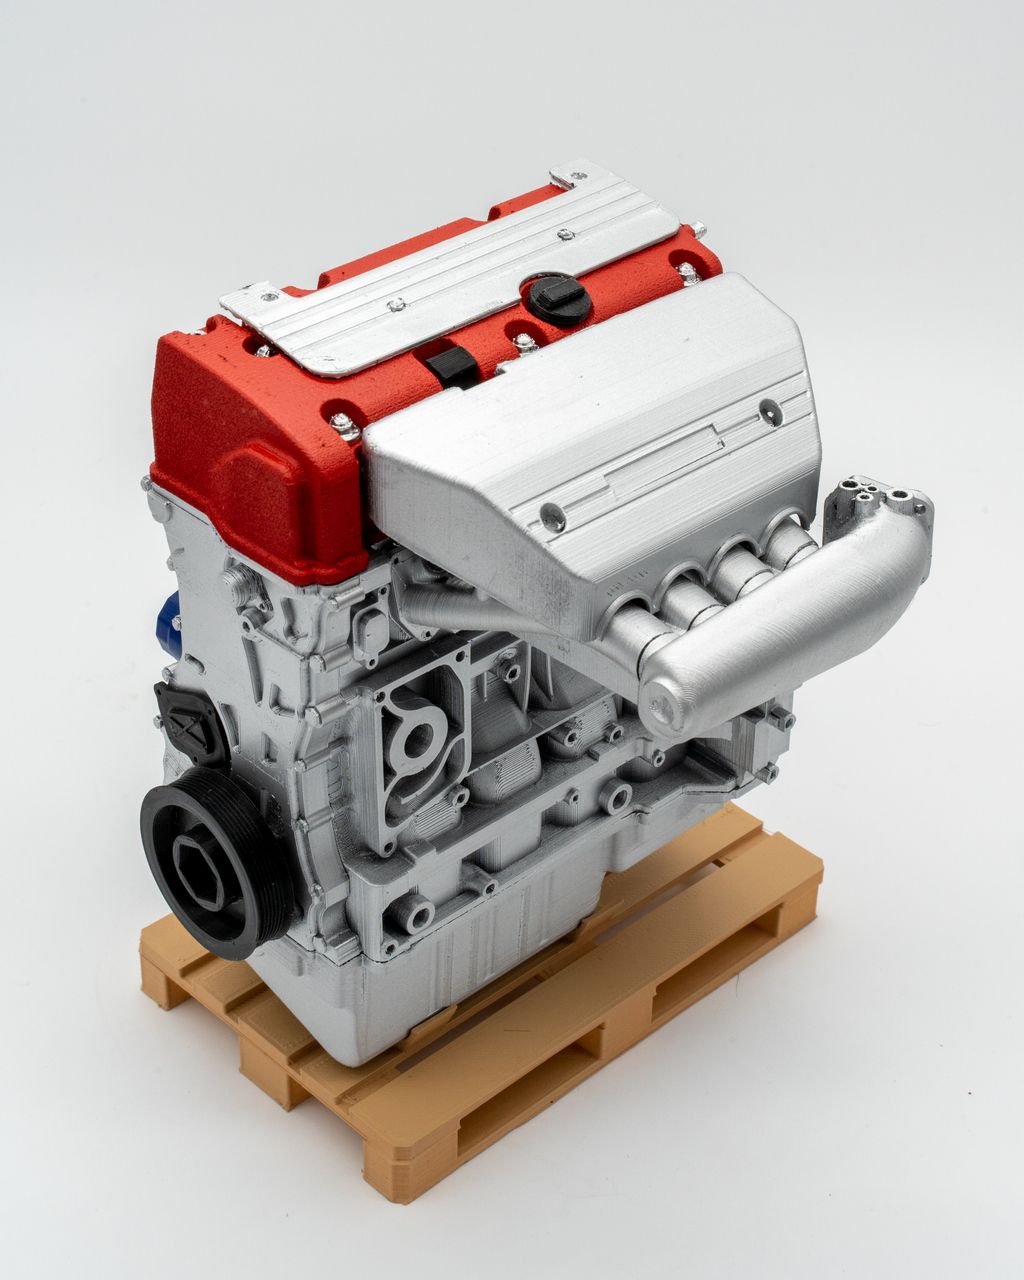 1/4 K-Series (K20/K24) RED Scale Engine - Assembled – dbsworks